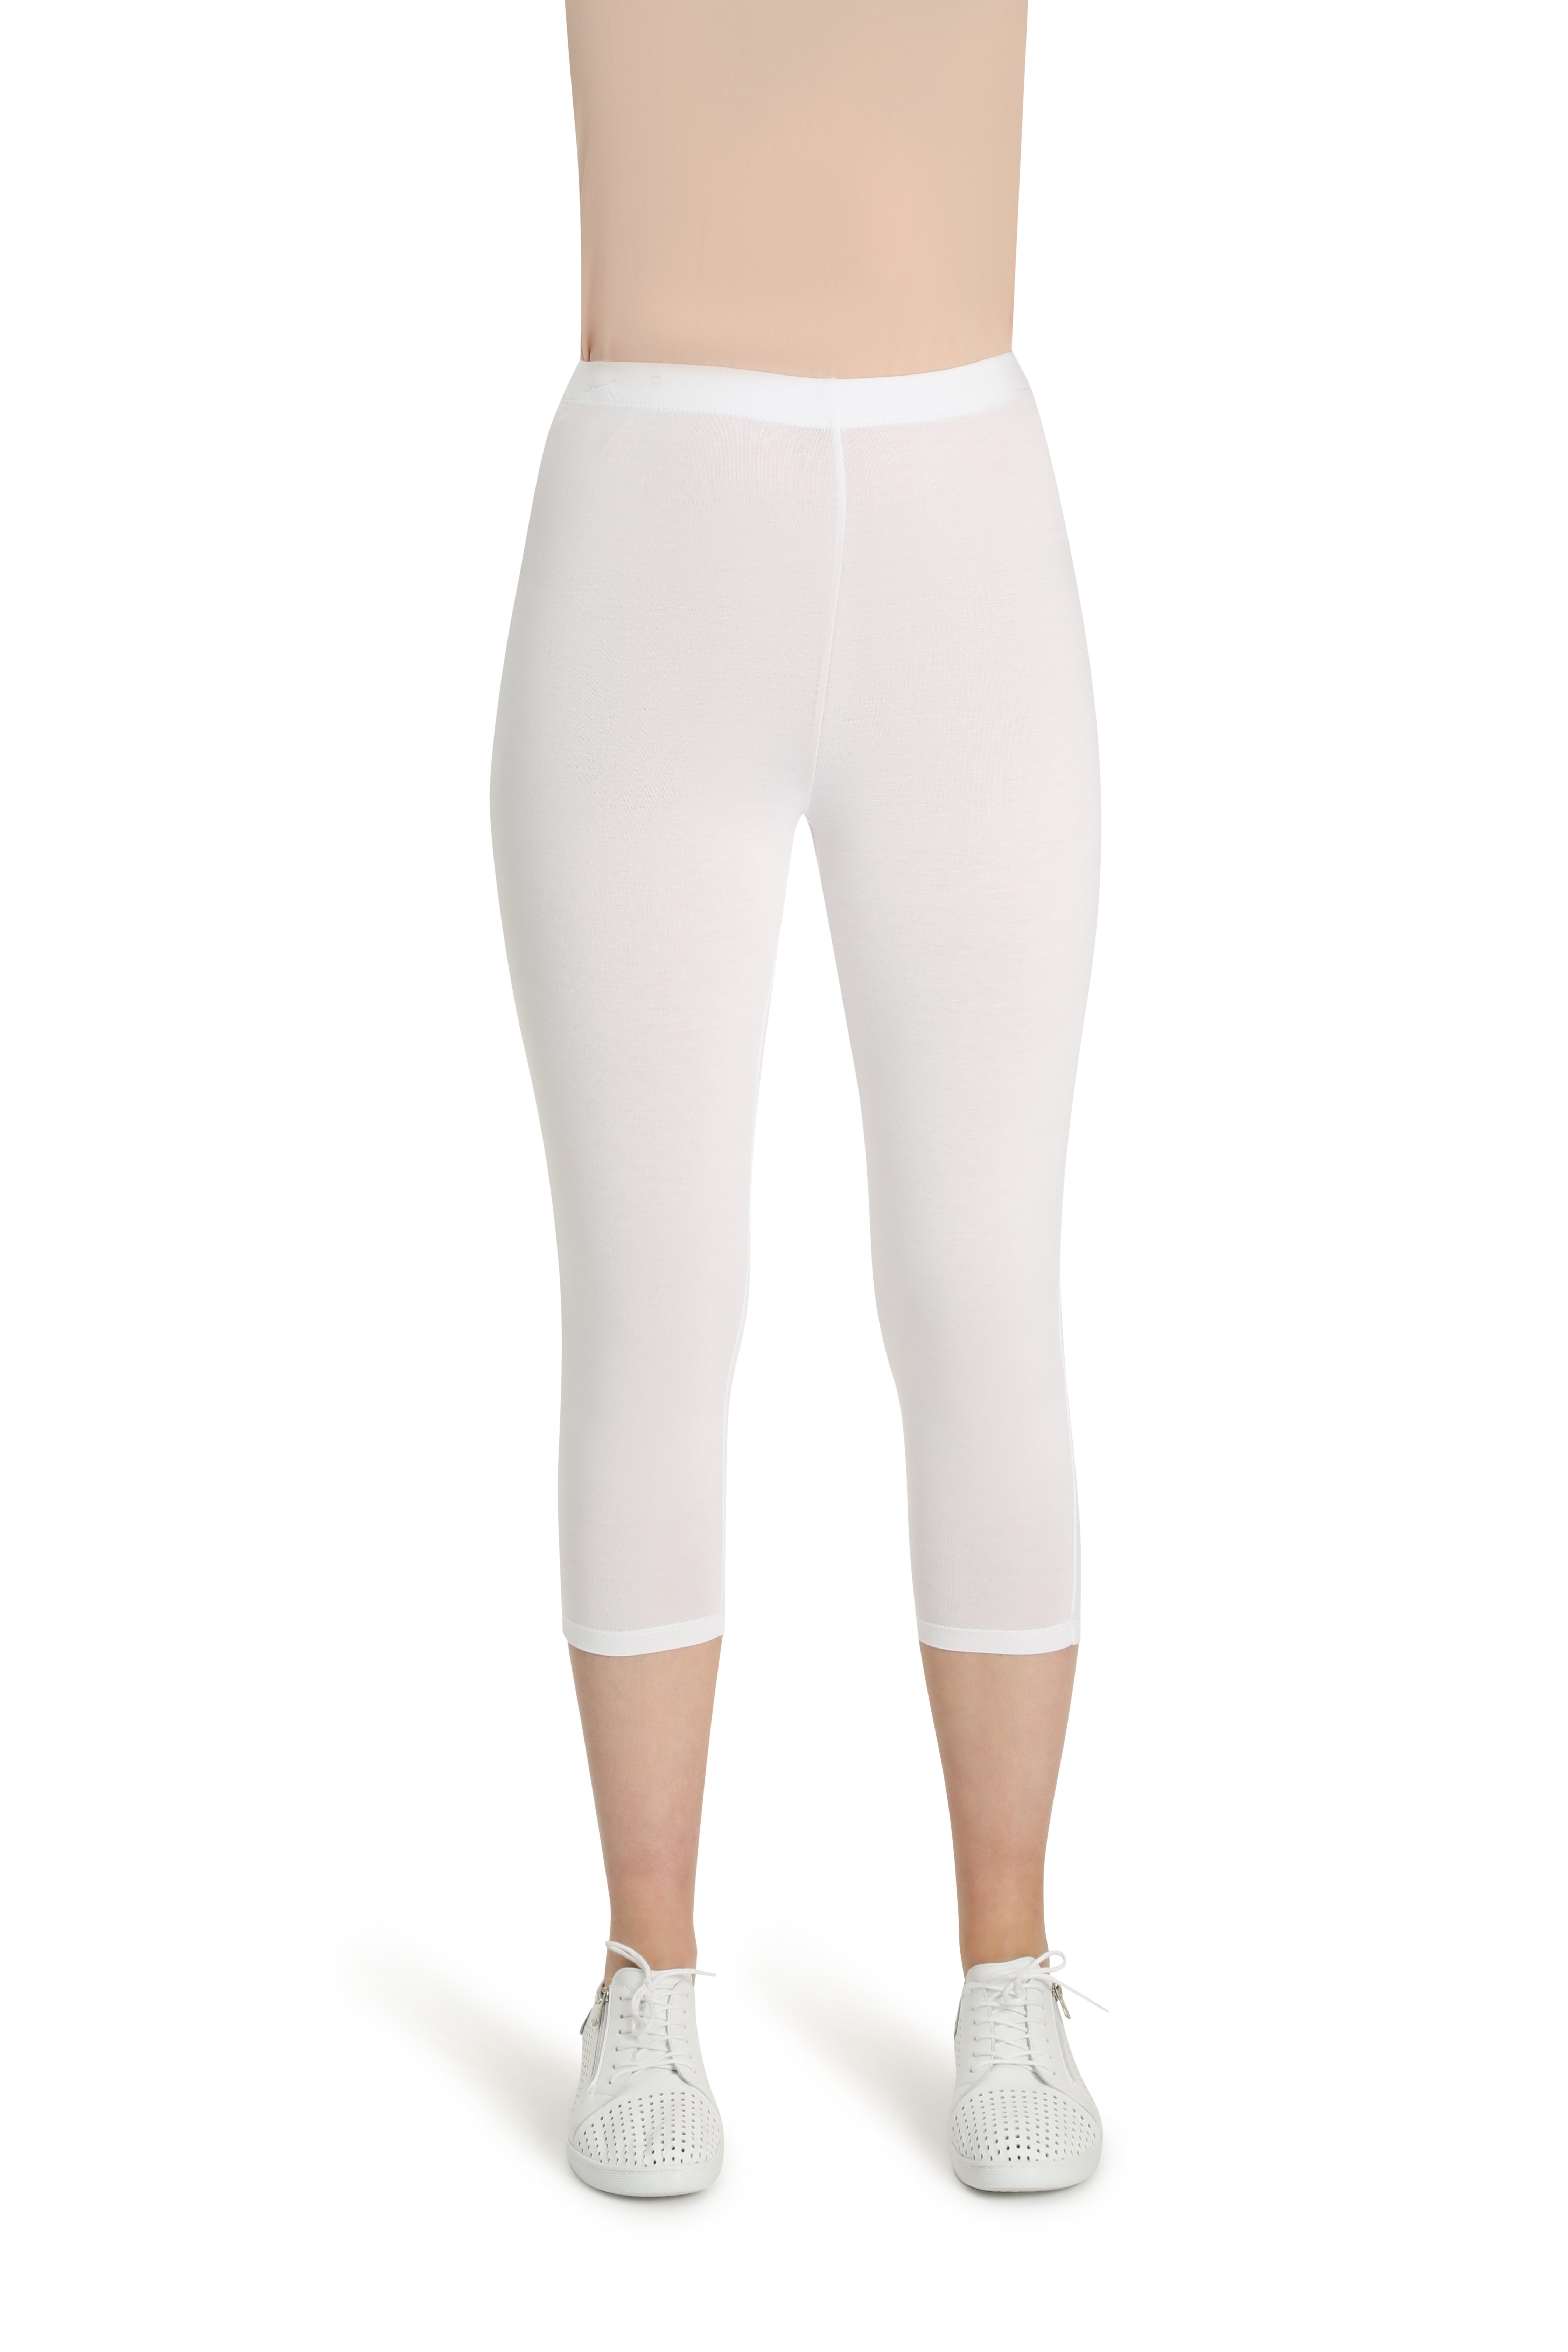 https://www.carolineeve.co.nz/content/products/mid-calf-legging-plain-pull-on-elastic-waistband-tl-78cm-white-1-3383tt.jpg